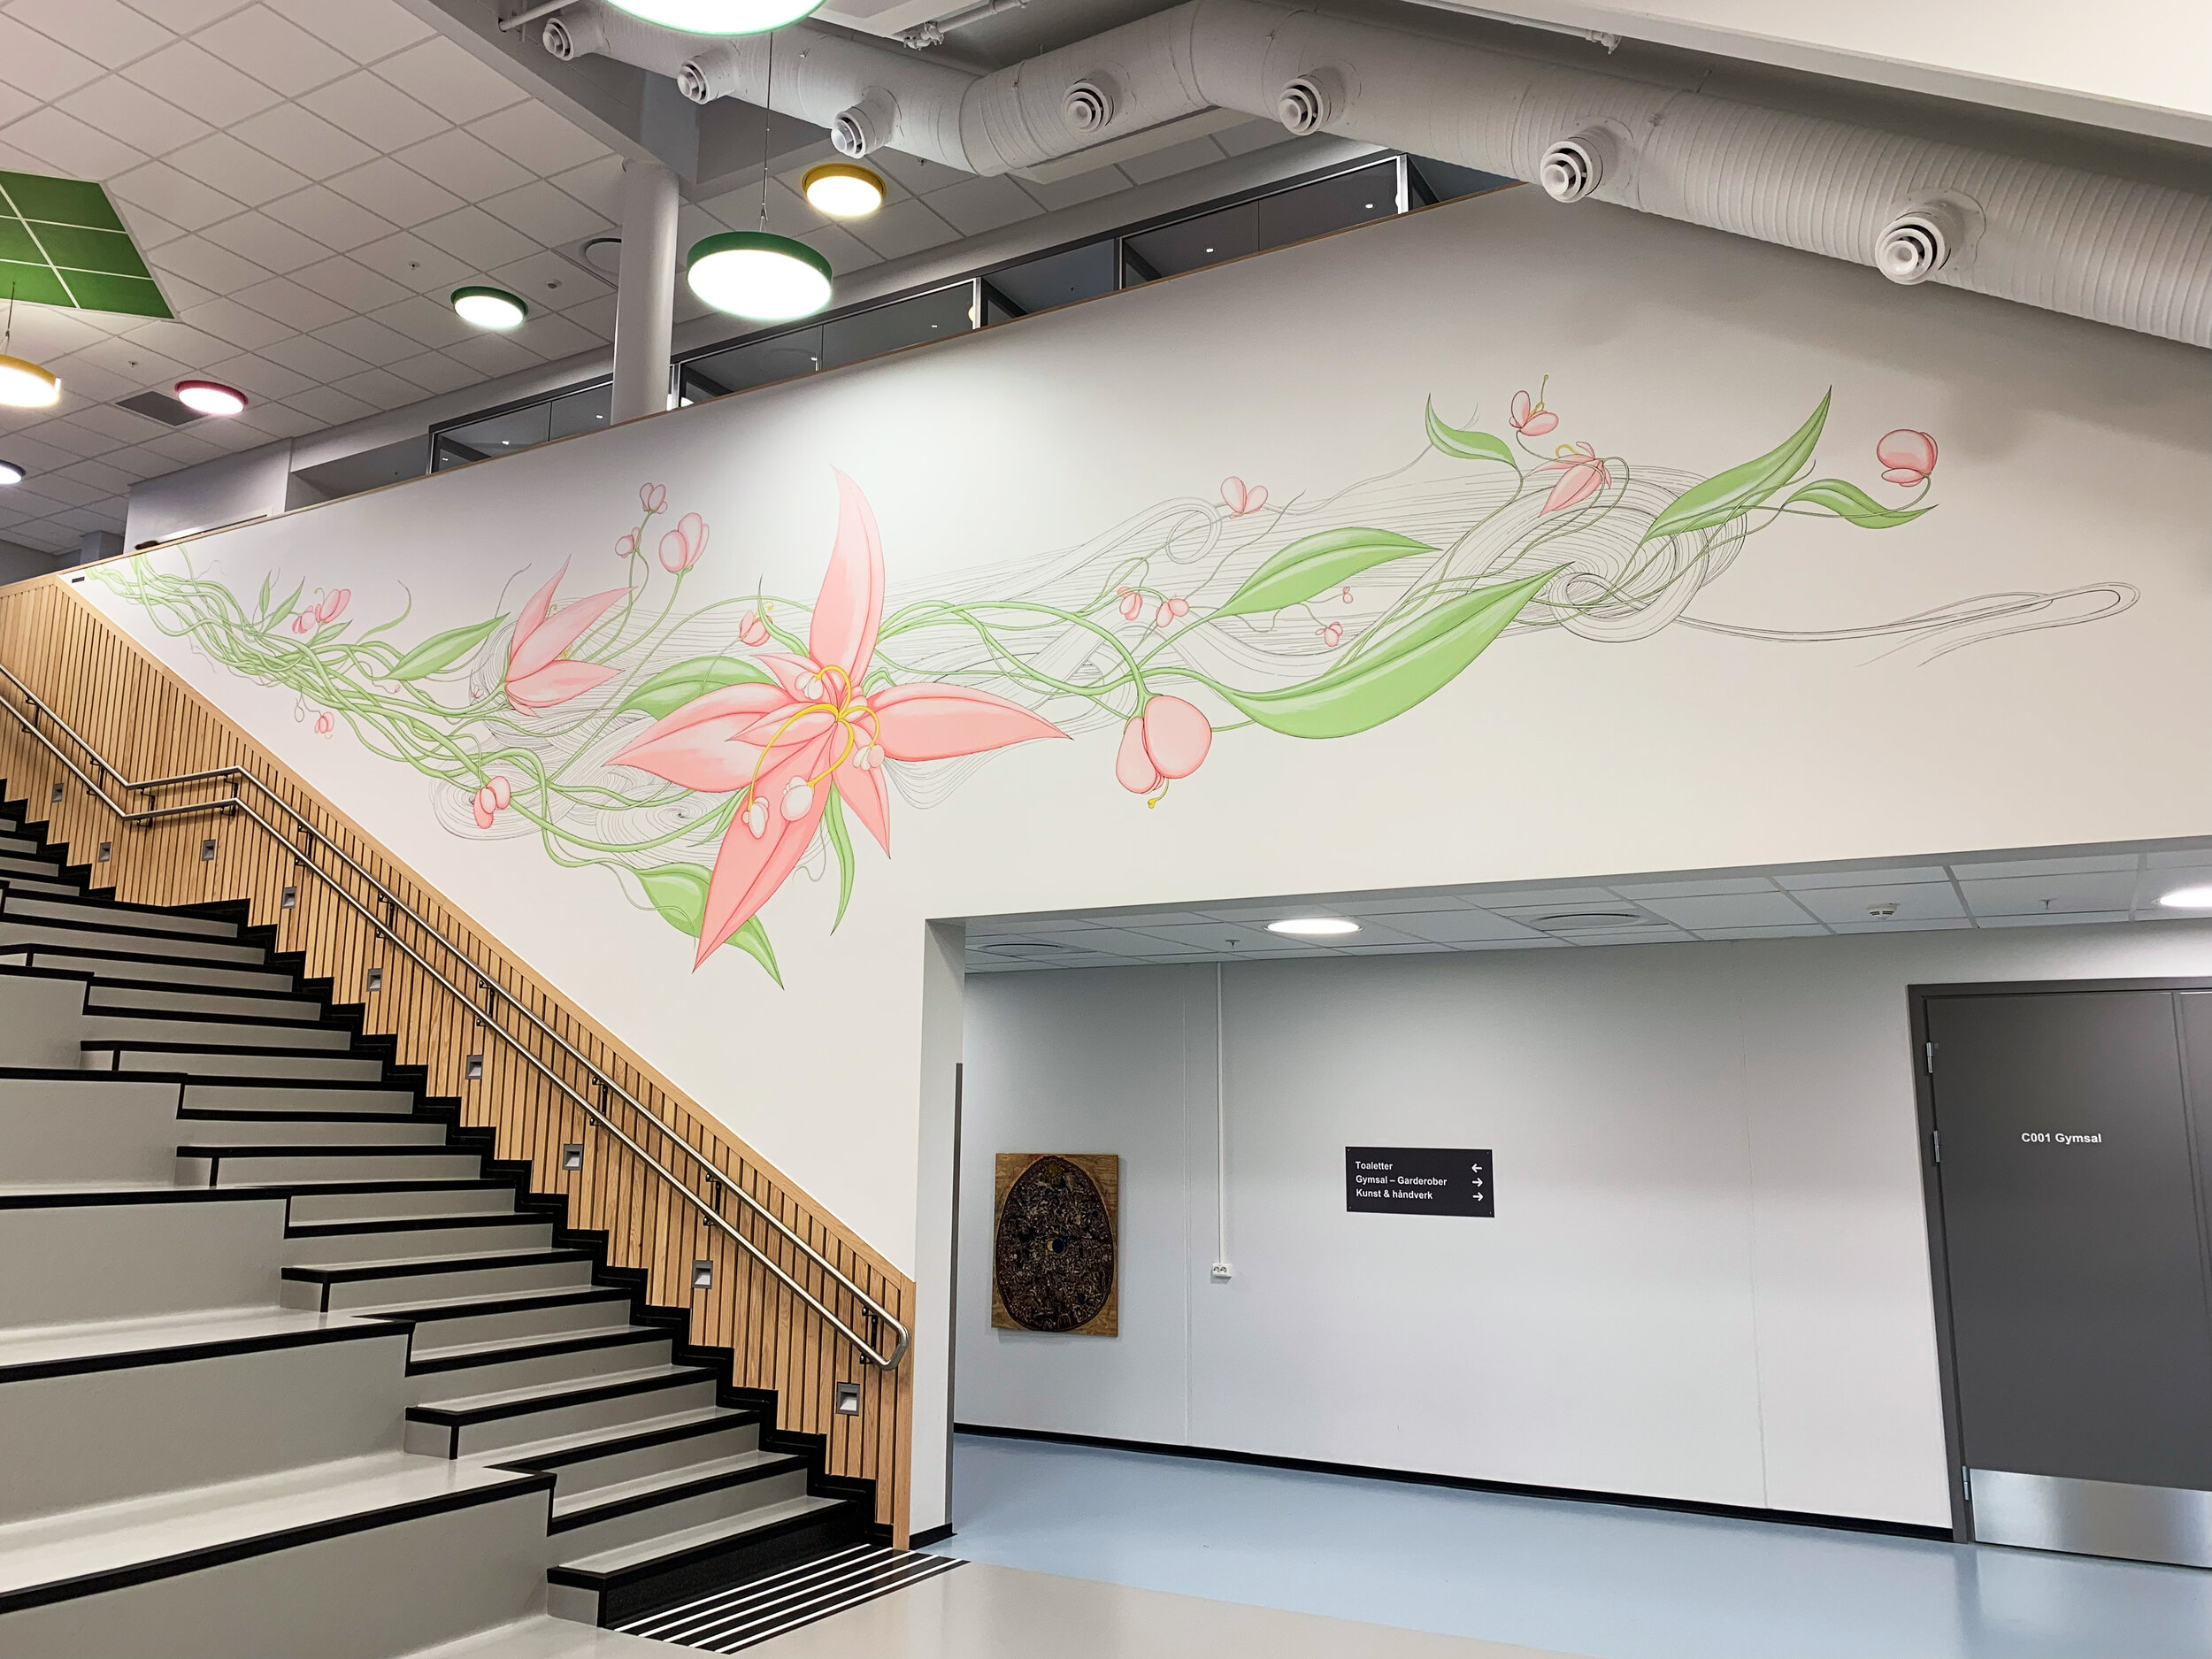   Flowering    acrylic paint and felt pen on wall, 15 x 3m  Harstad Elementary School, 2018    Photo:  Kjell Ove Storvik 